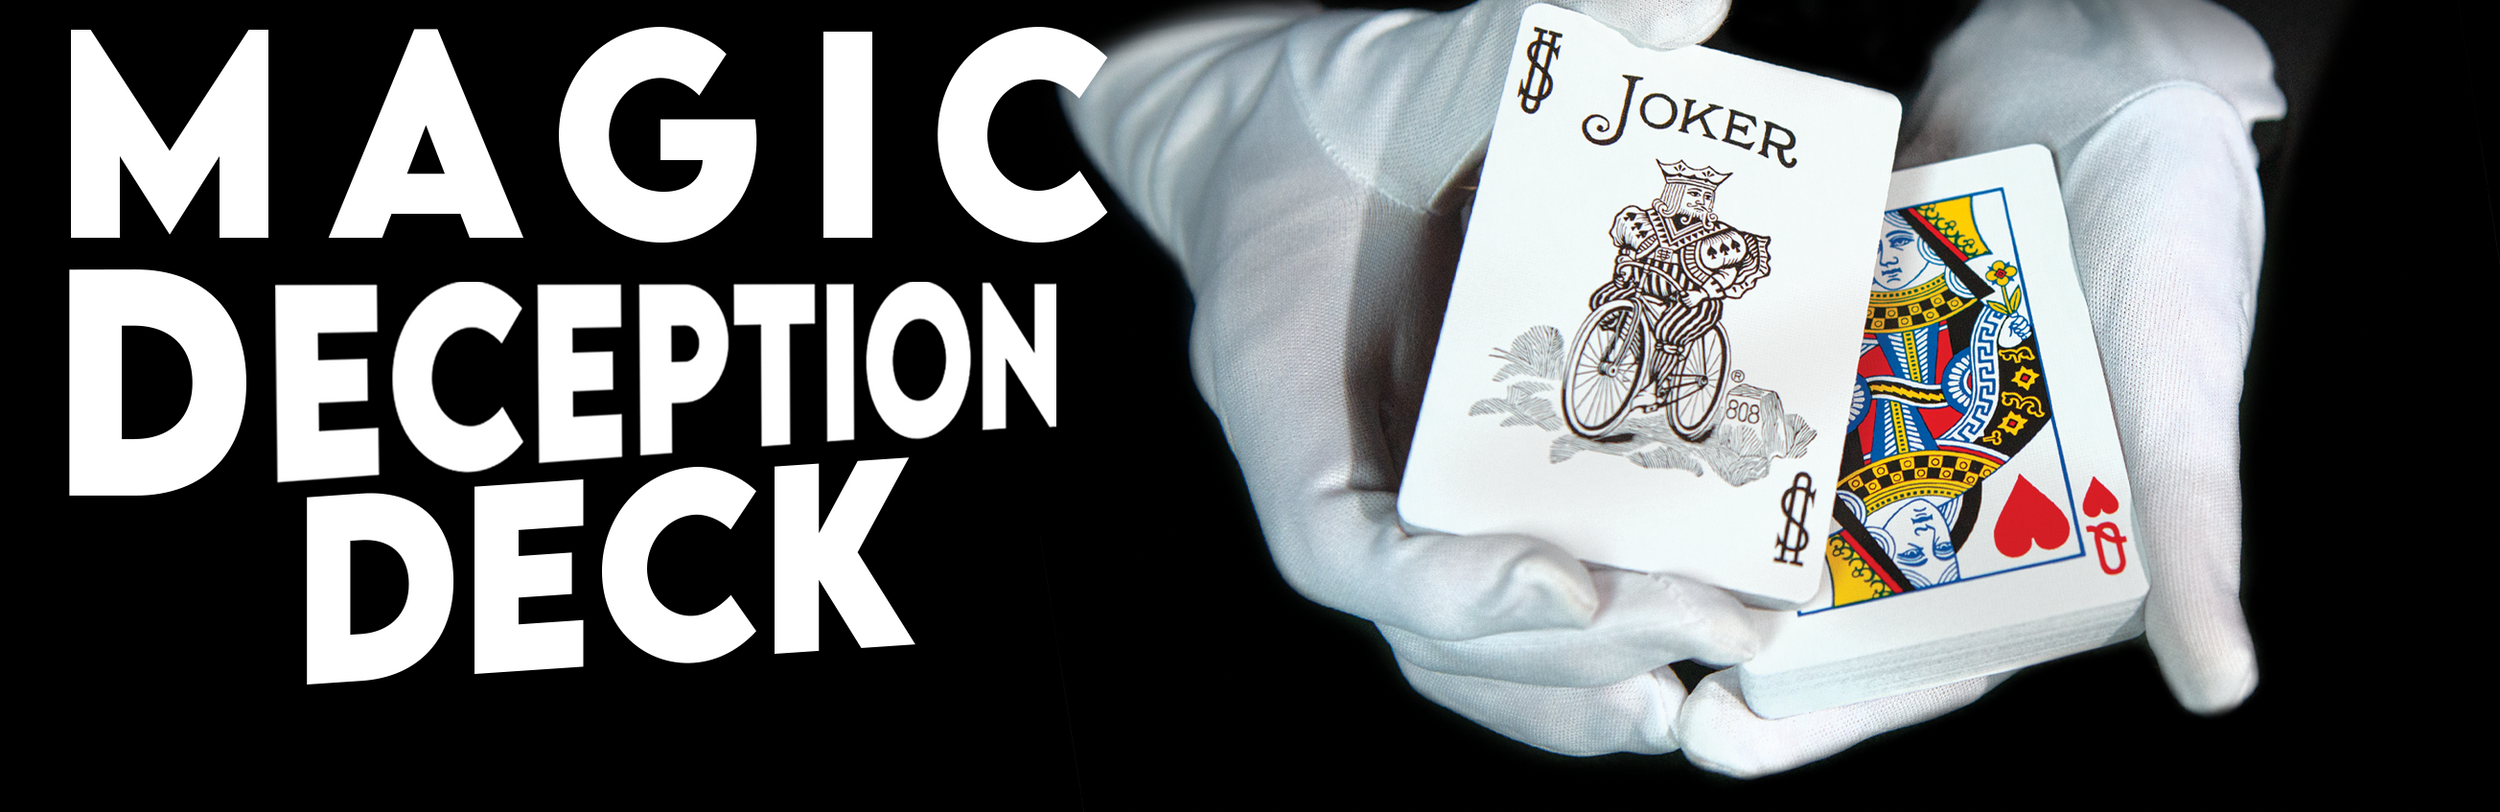 Magic Deception Deck - Color Changing Magic Card Trick